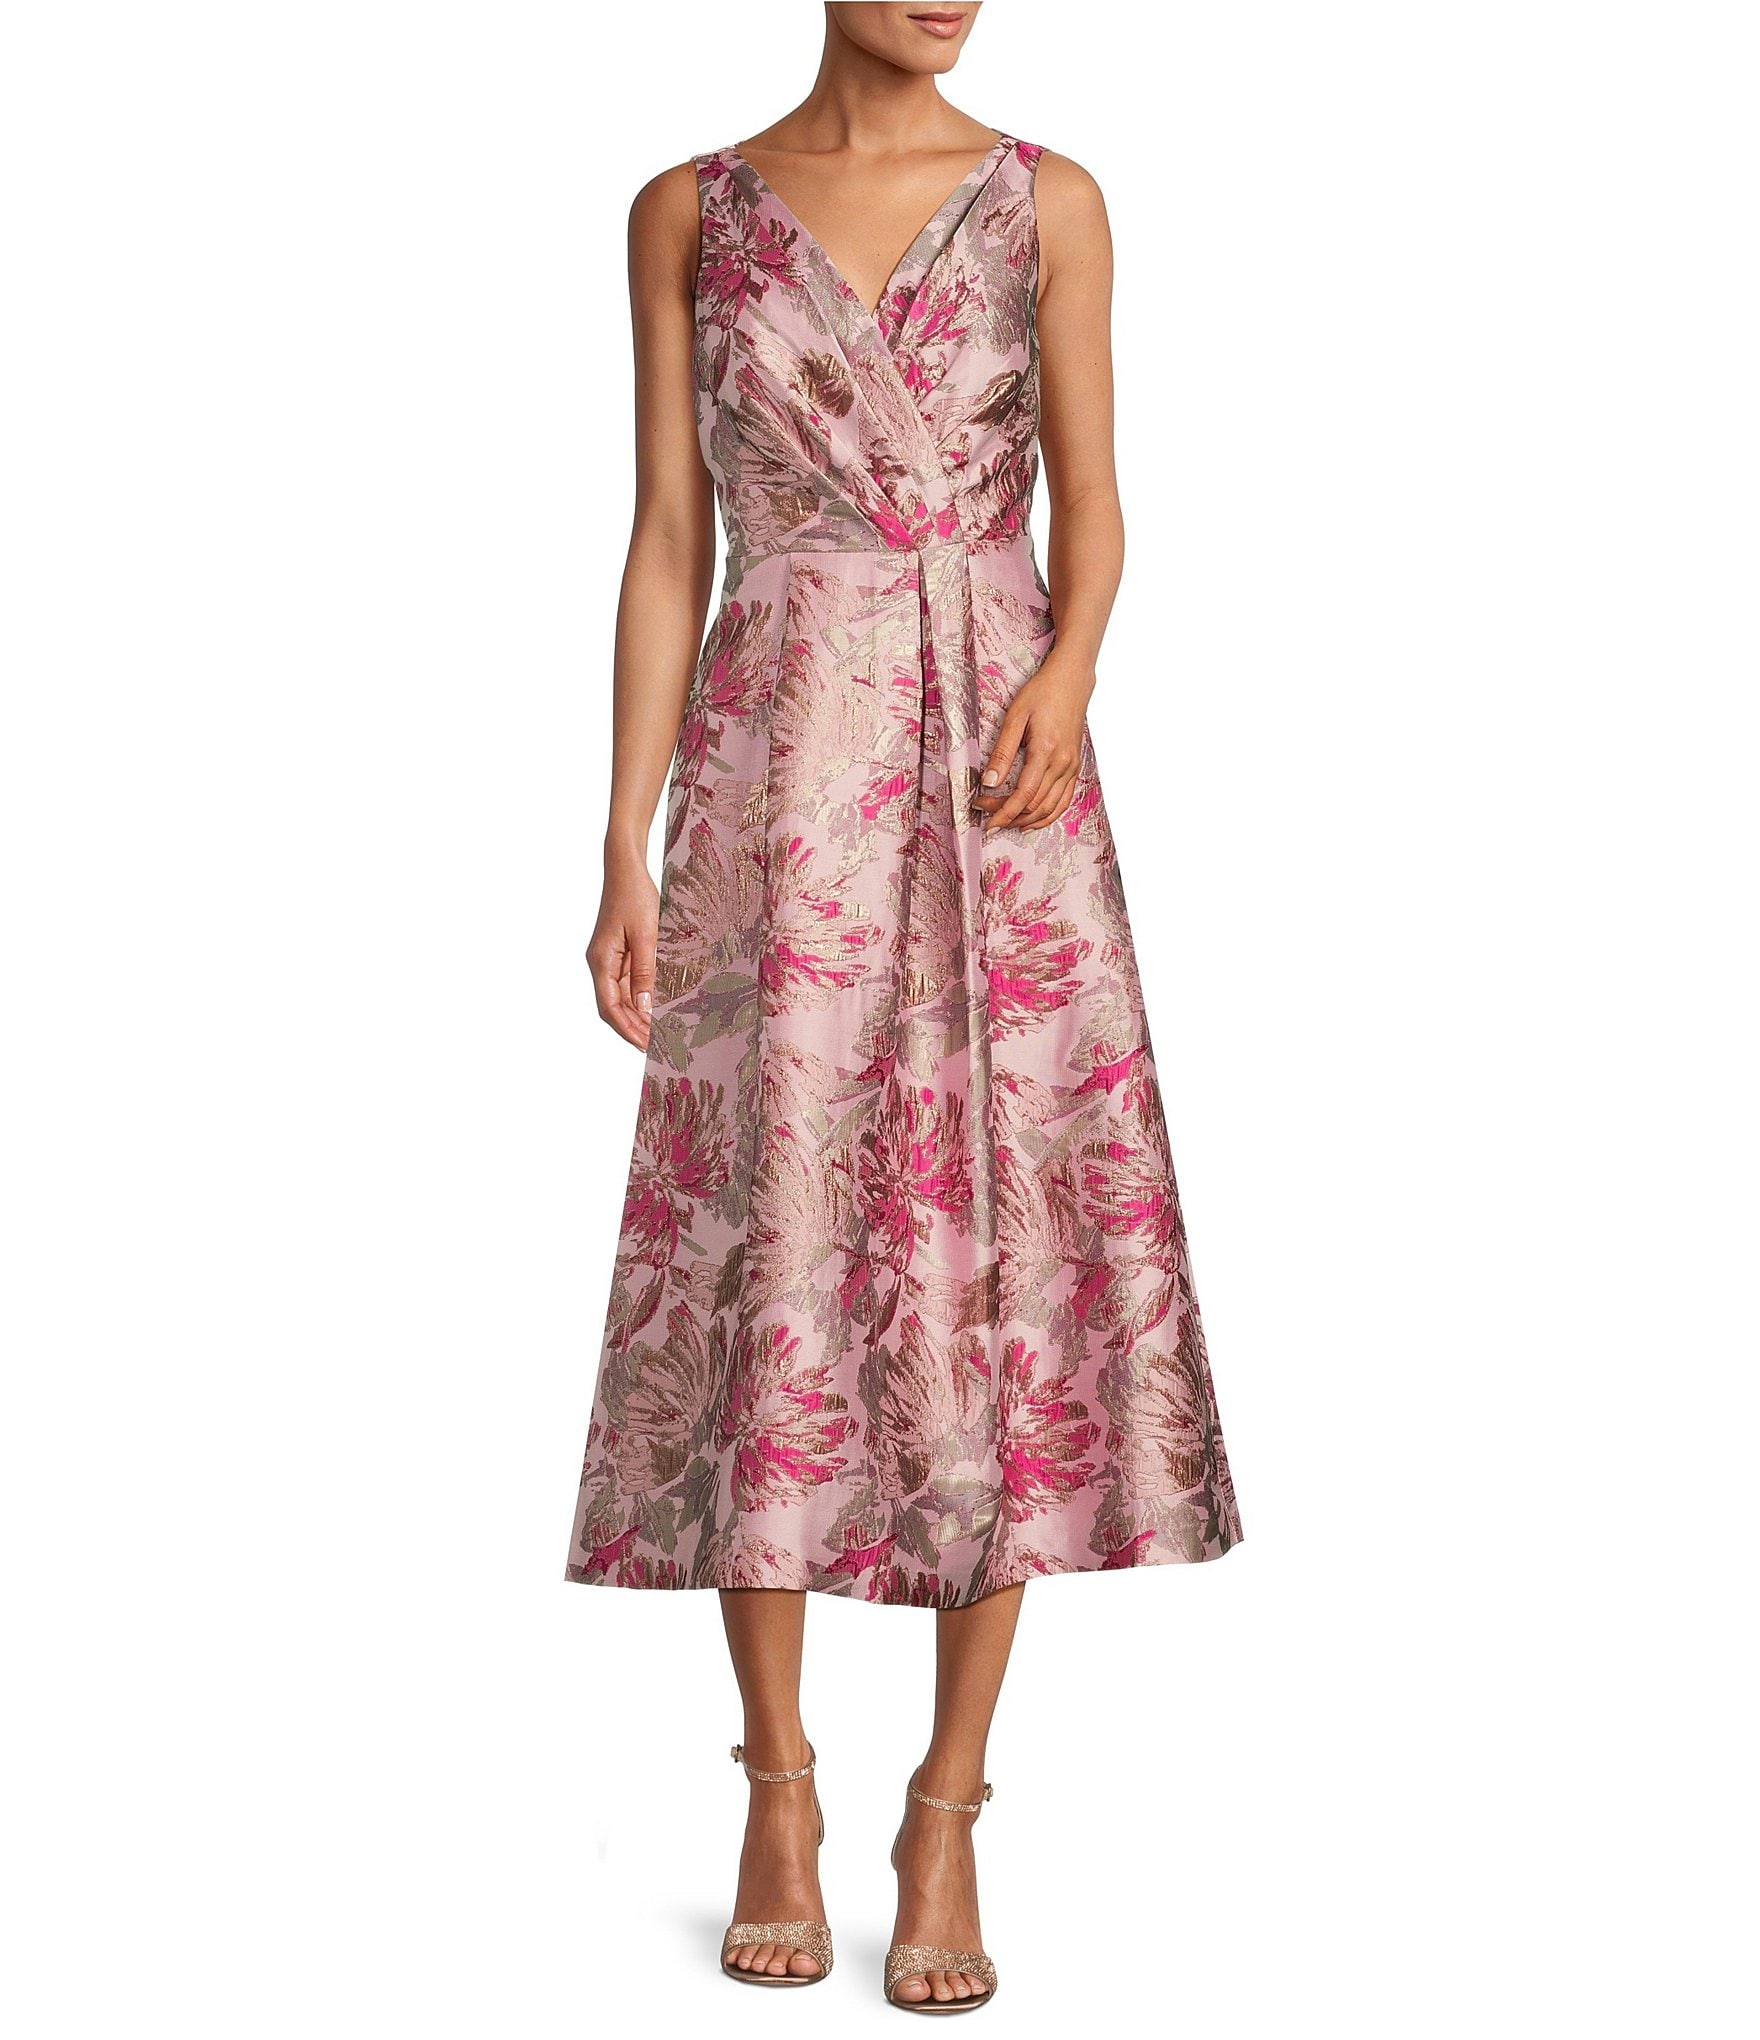 https://dimg.dillards.com/is/image/DillardsZoom/zoom/kay-unger-metallic-floral-print-sleeveless-fit-and-flare-tea-length-dress/00000000_zi_38f0a014-8bea-4a7c-8dde-0a17dc1a5498.jpg